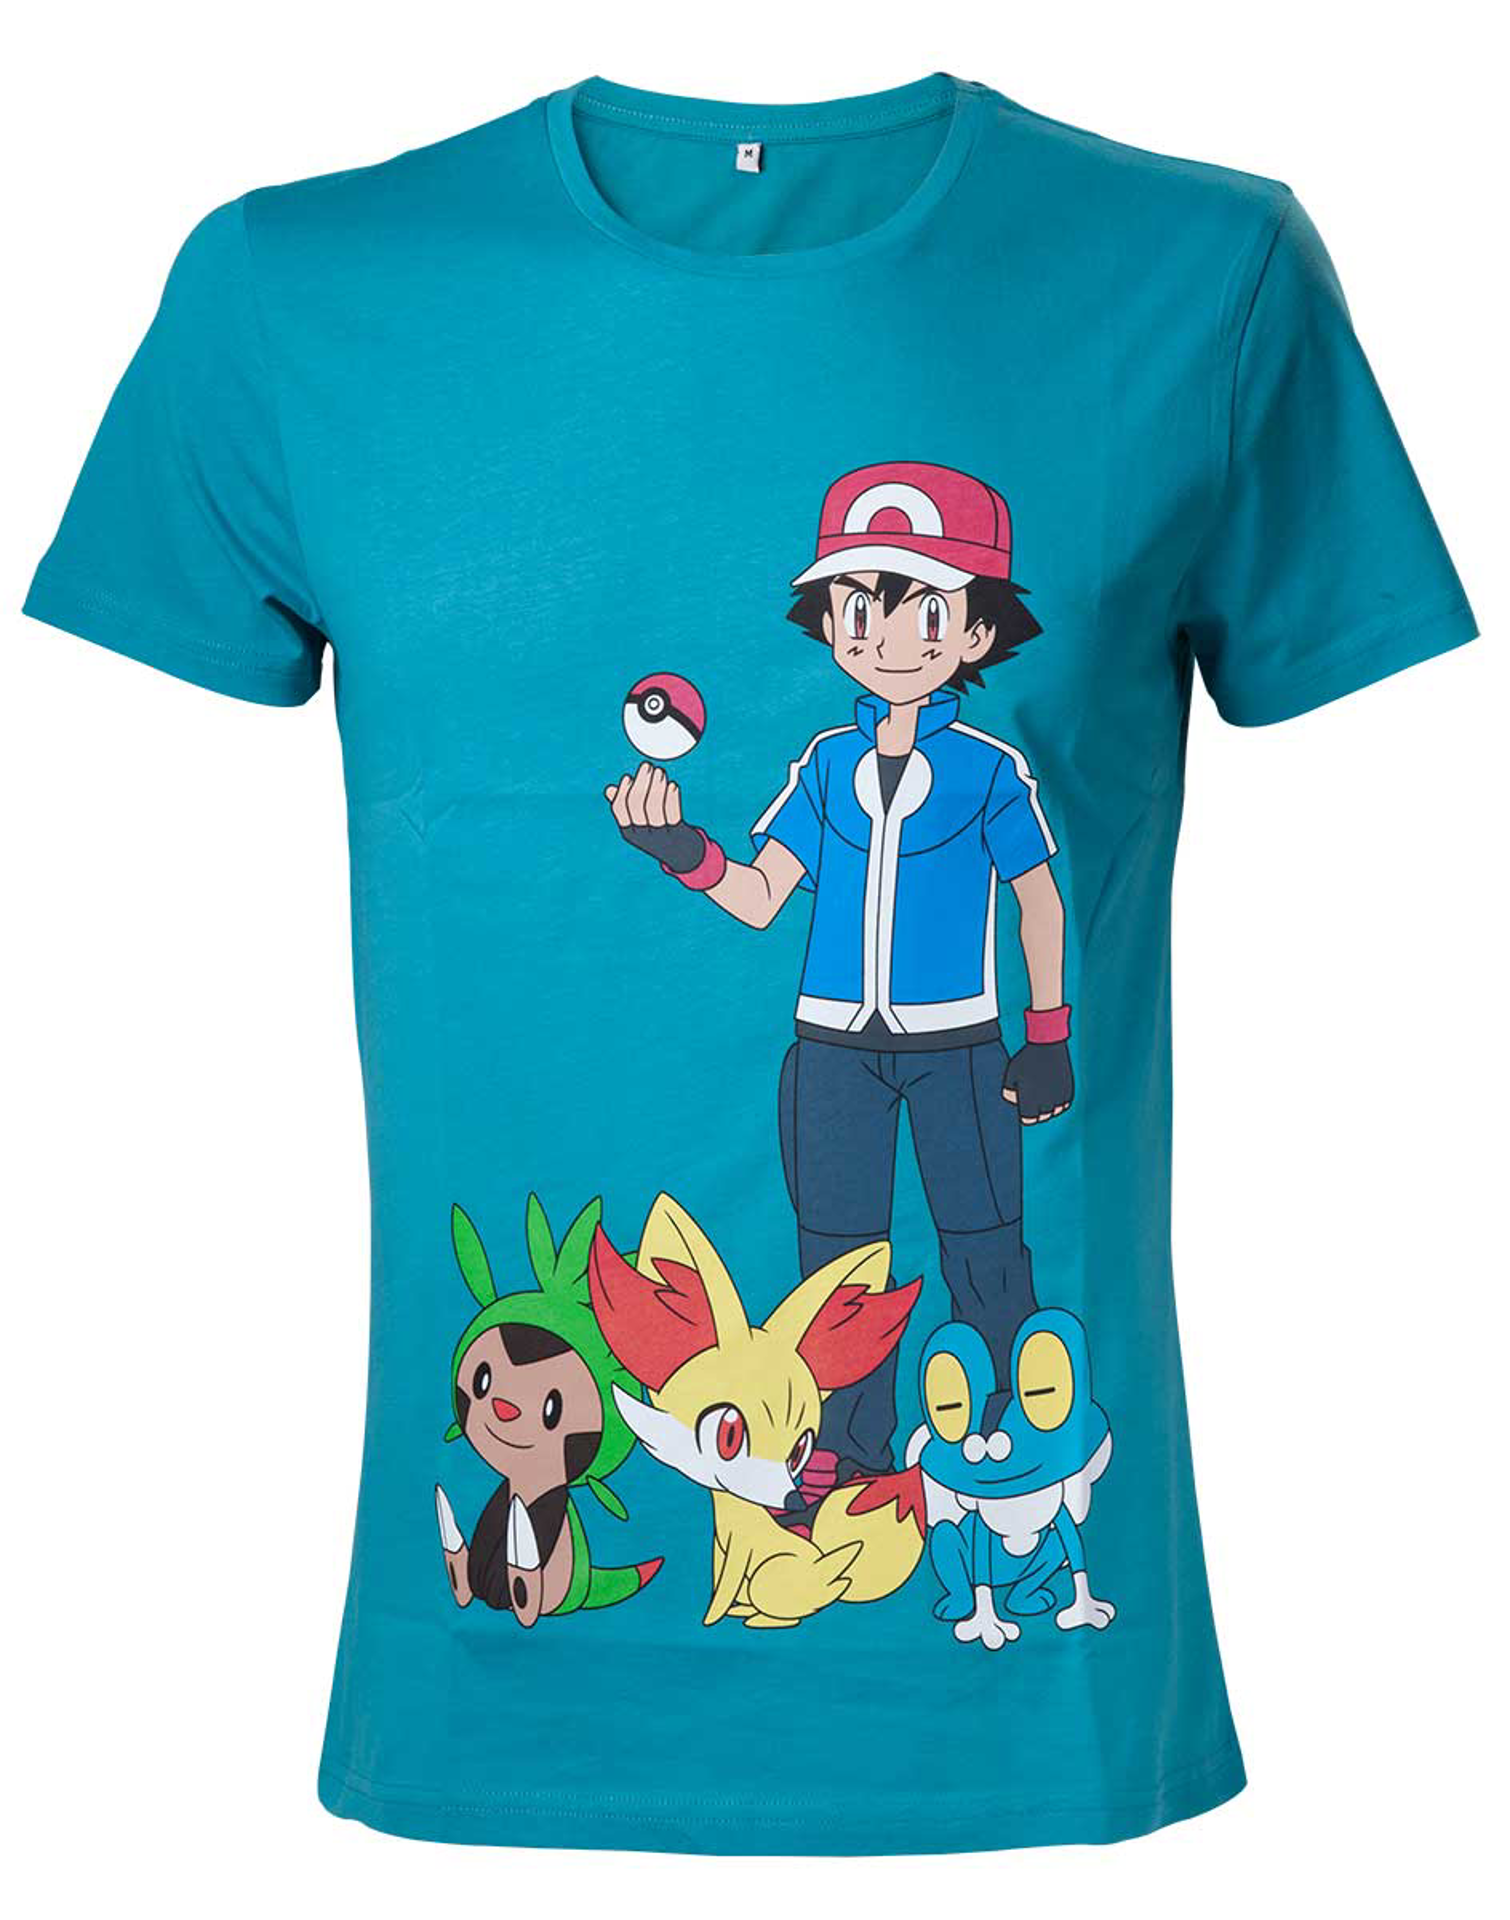 Pokémon - Ash Ketchum Blue T-Shirt - XL